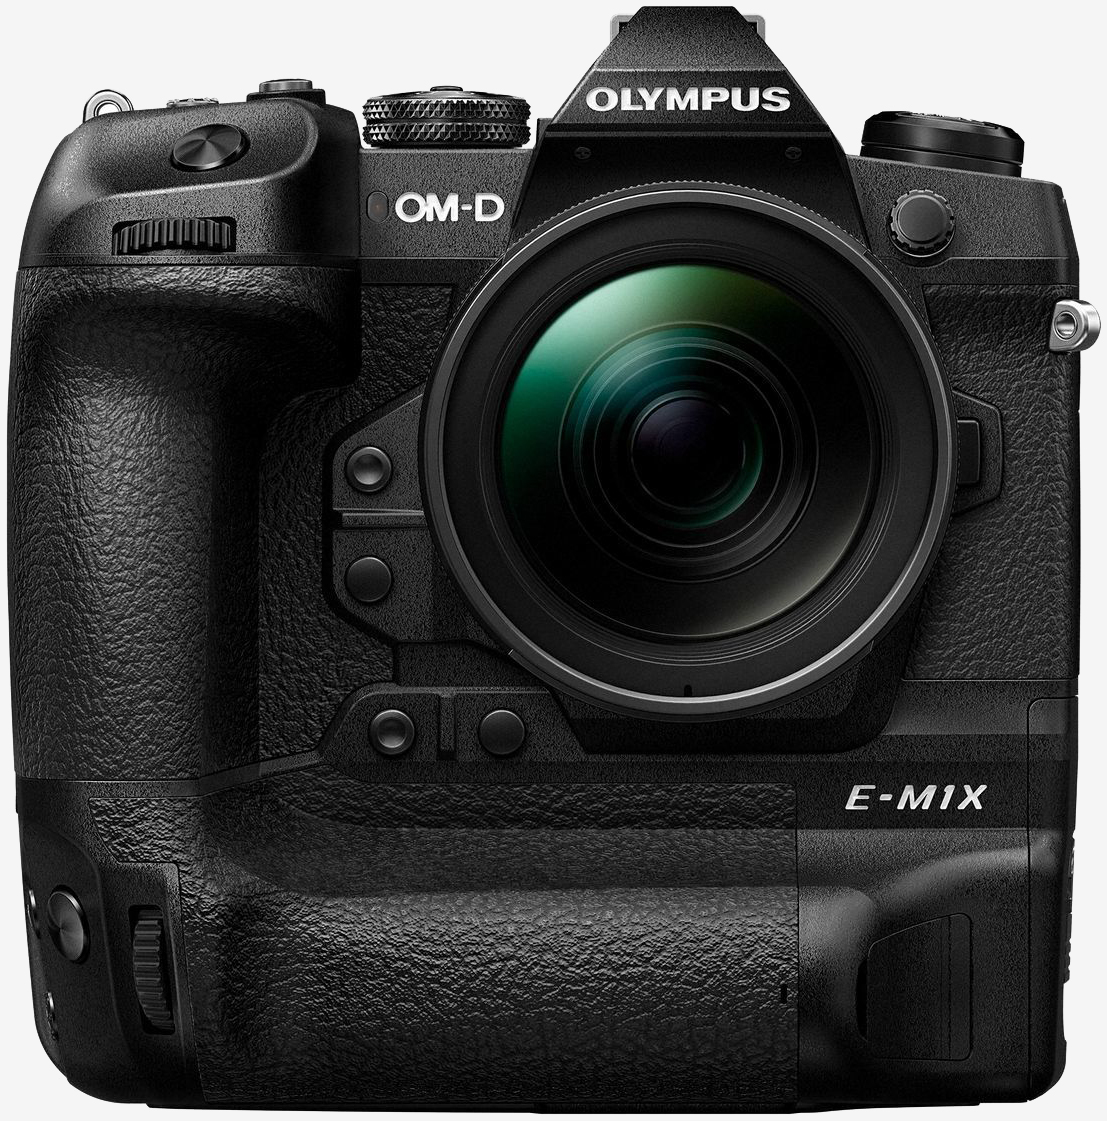 Olympus announces OM-D E-M1X, a not-so-compact micro four thirds camera